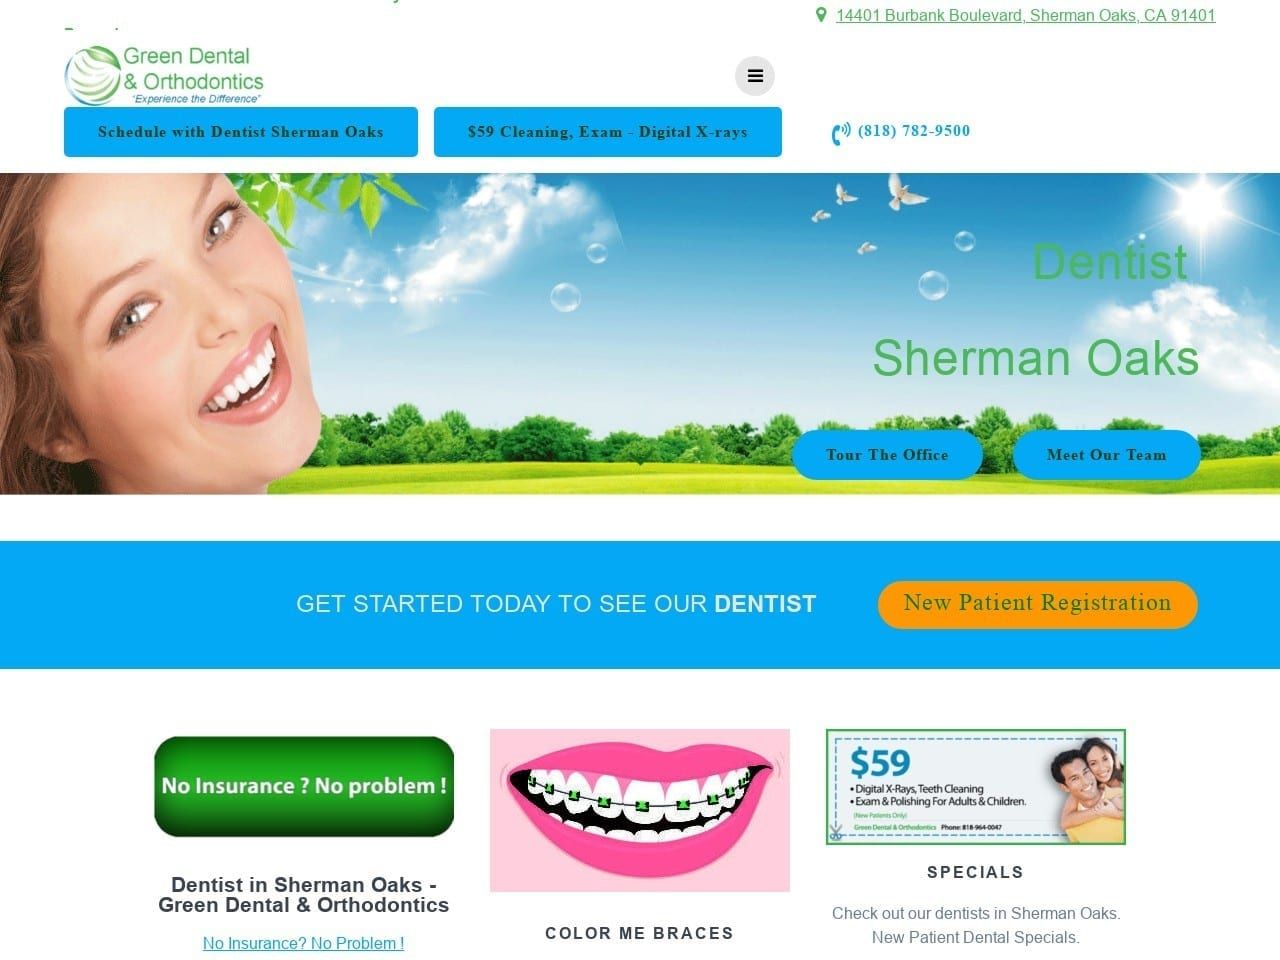 Green Dental Website Screenshot from greendental.com